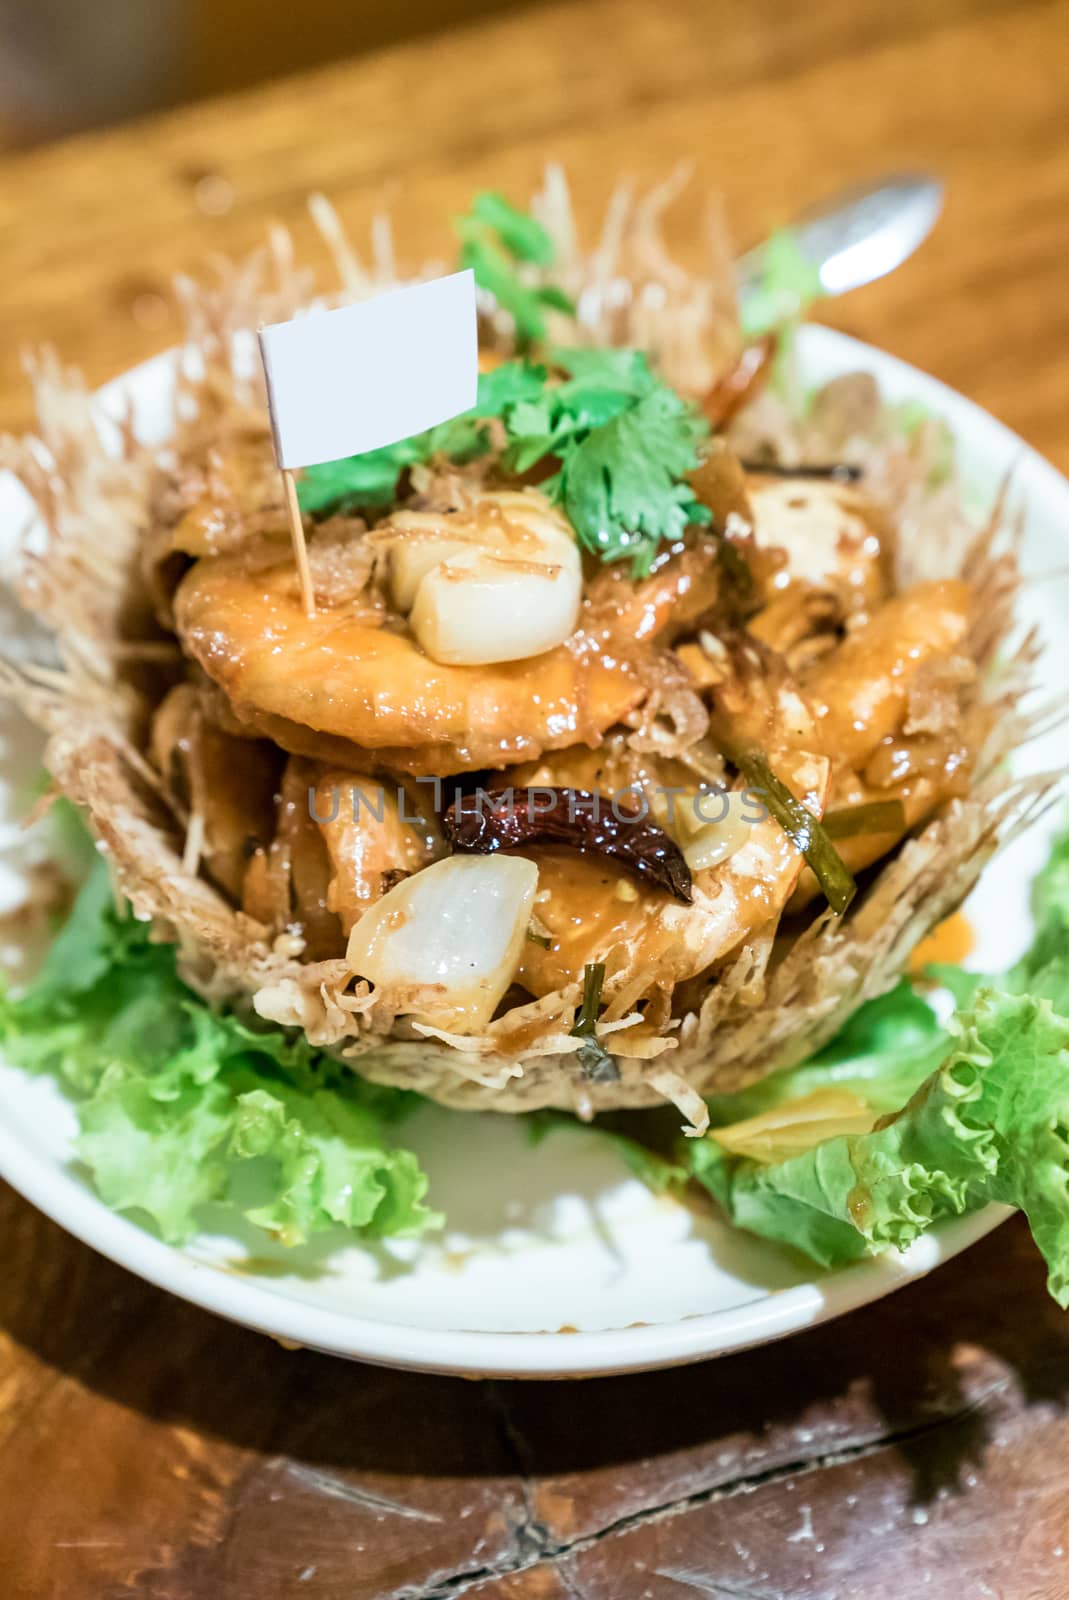 fried Shrimp with Tamarind sauce